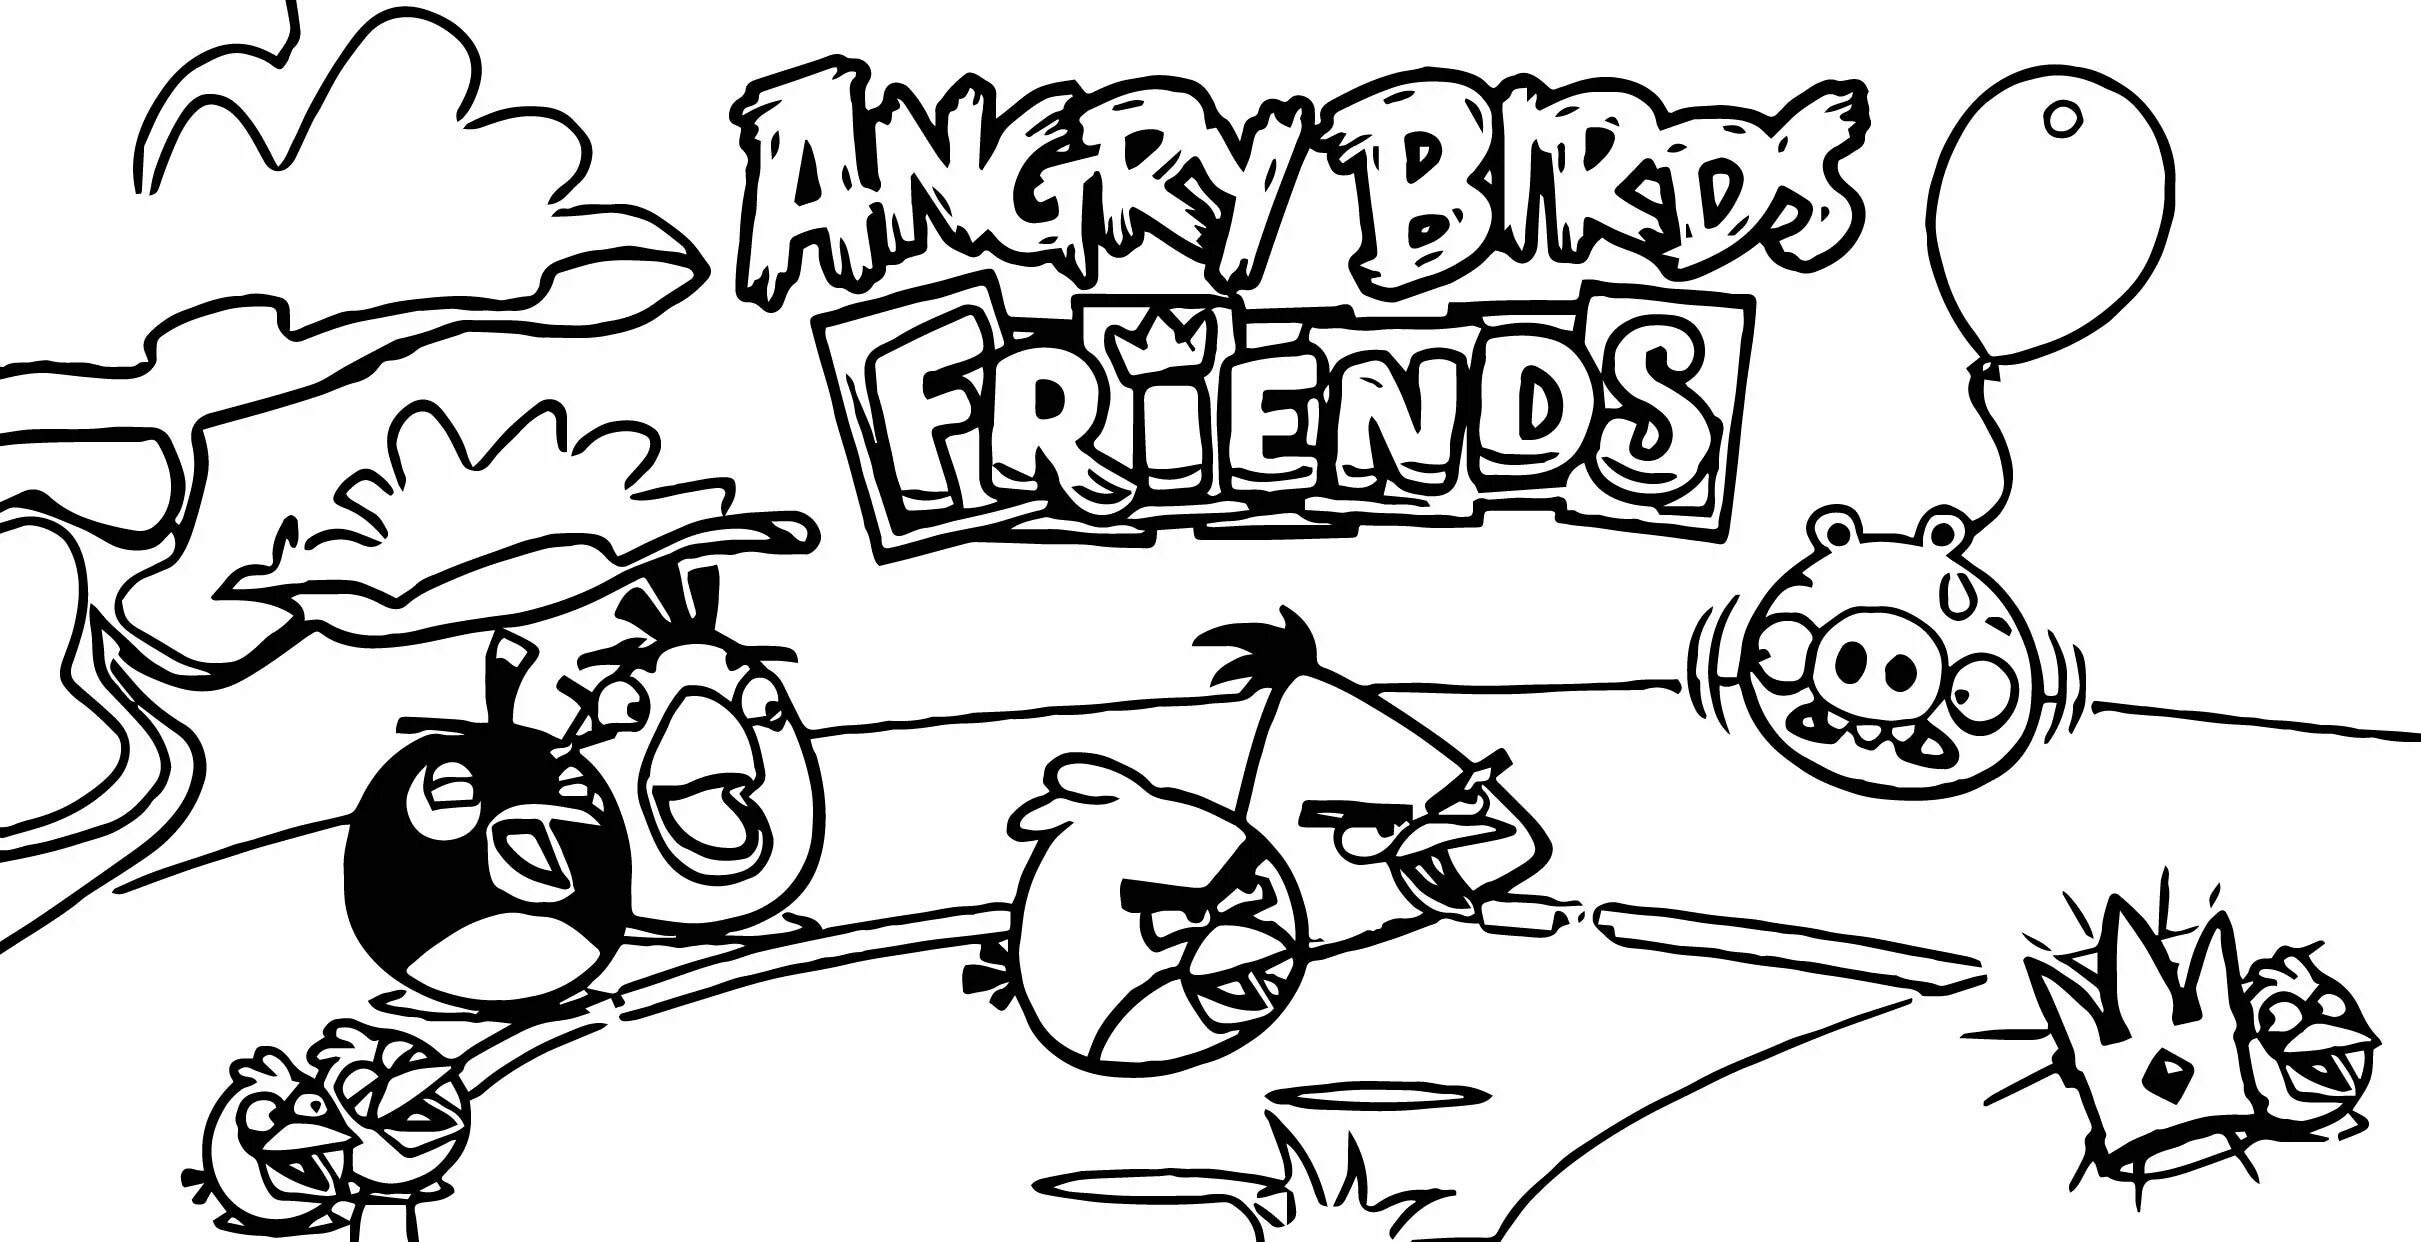 Angry birds seasons #7